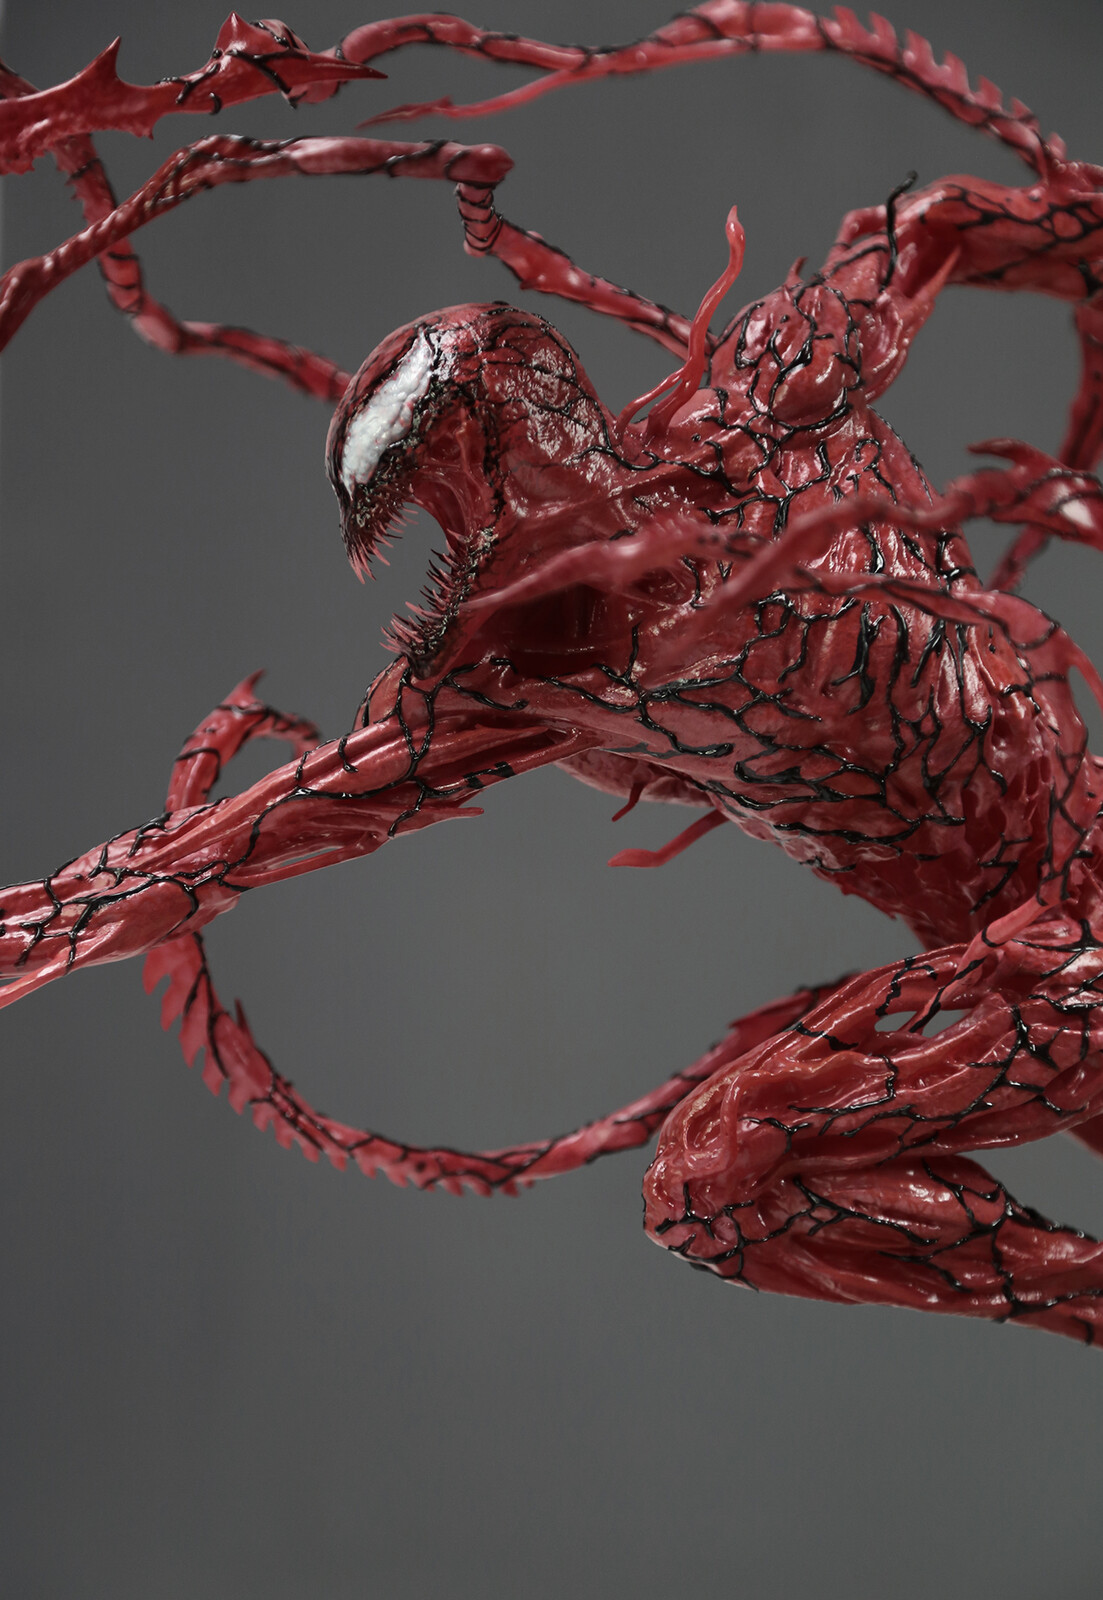 Venom 2 (Carnage Concept Maquette) (2019)